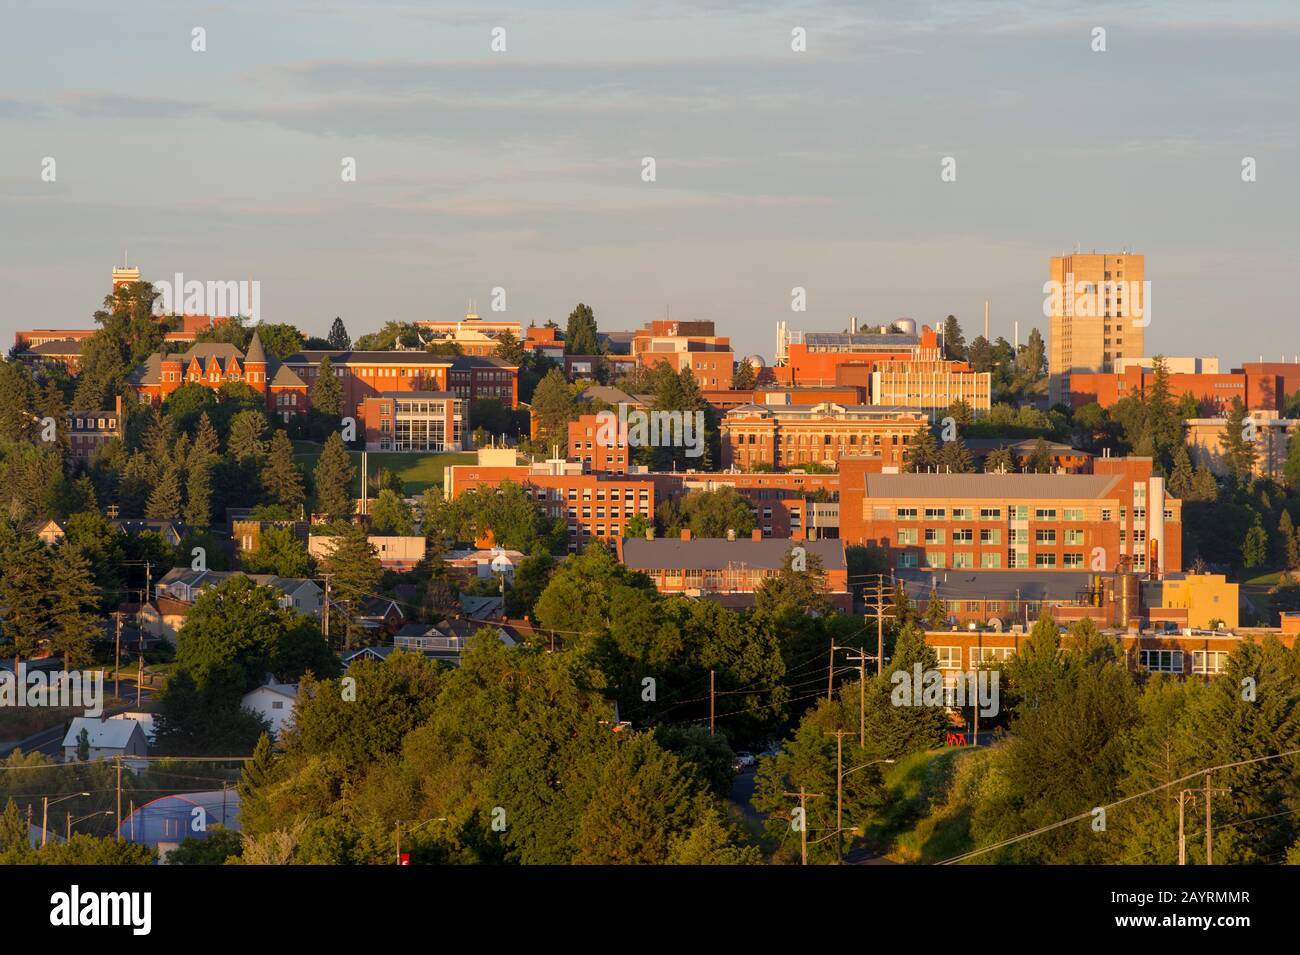 View of the Washington State University in Pullman, Washington State, USA. Stock Photo